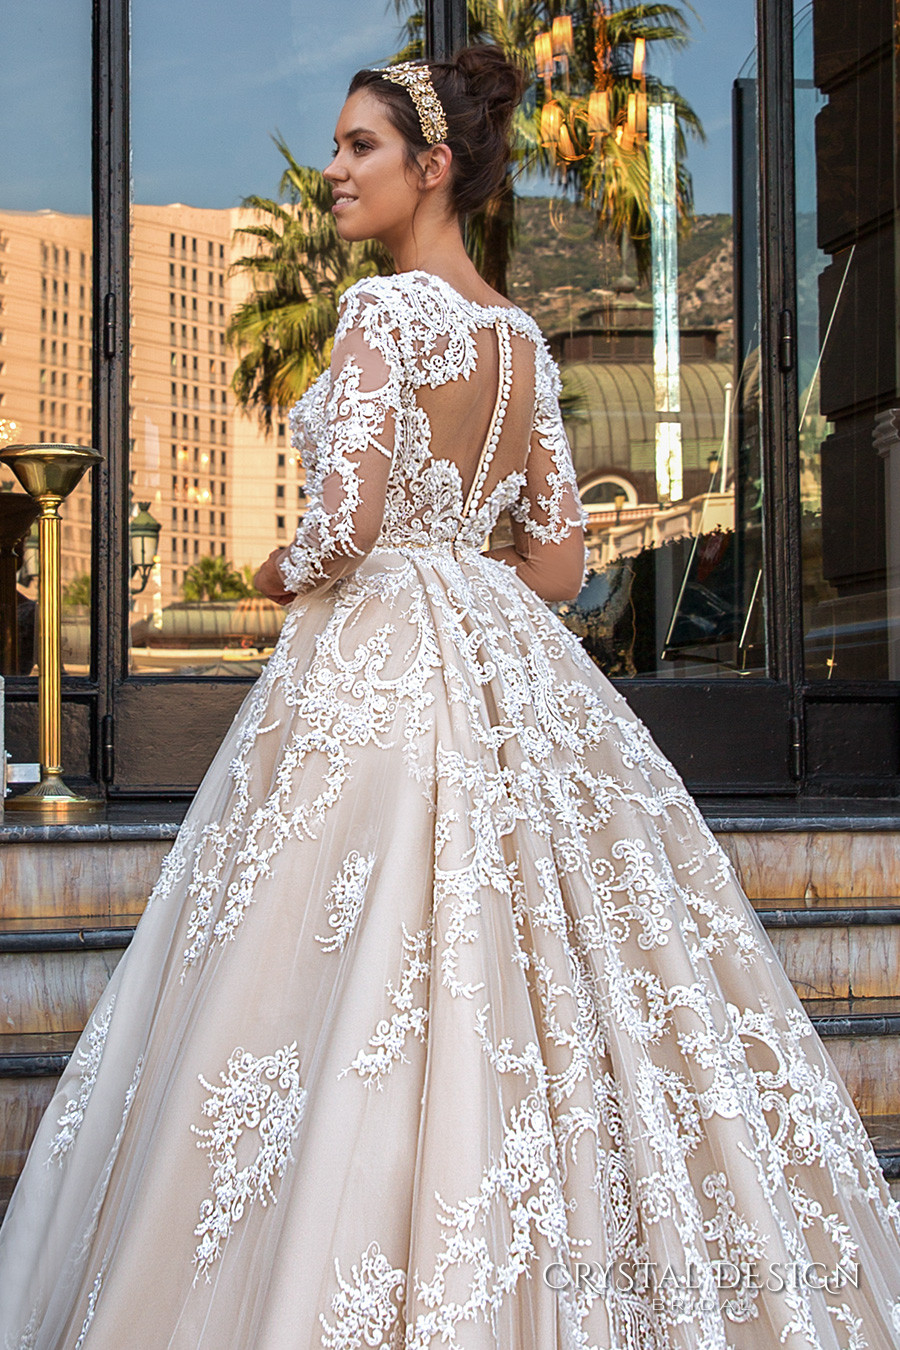 Crystal Wedding Dresses
 Crystal Design 2017 Wedding Dresses — Haute Couture Bridal